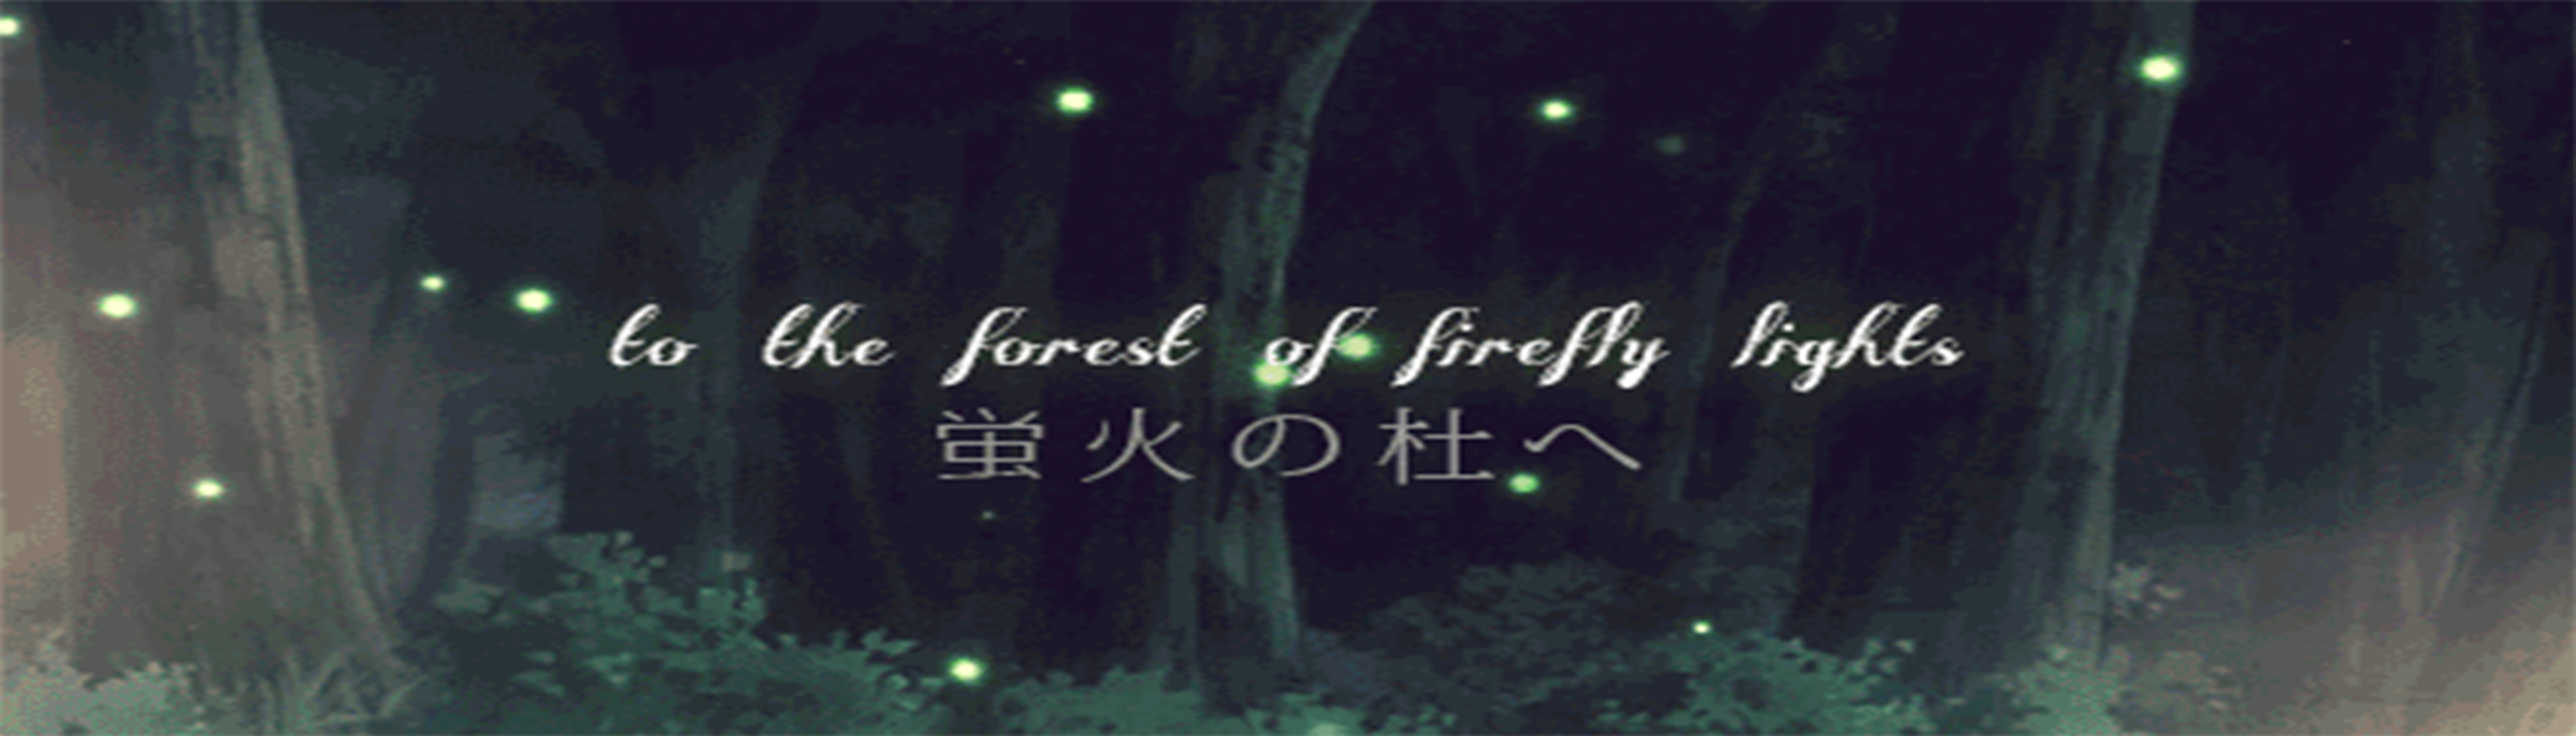 دانلود انیمه کارتونی To the Forest of Firefly Lights